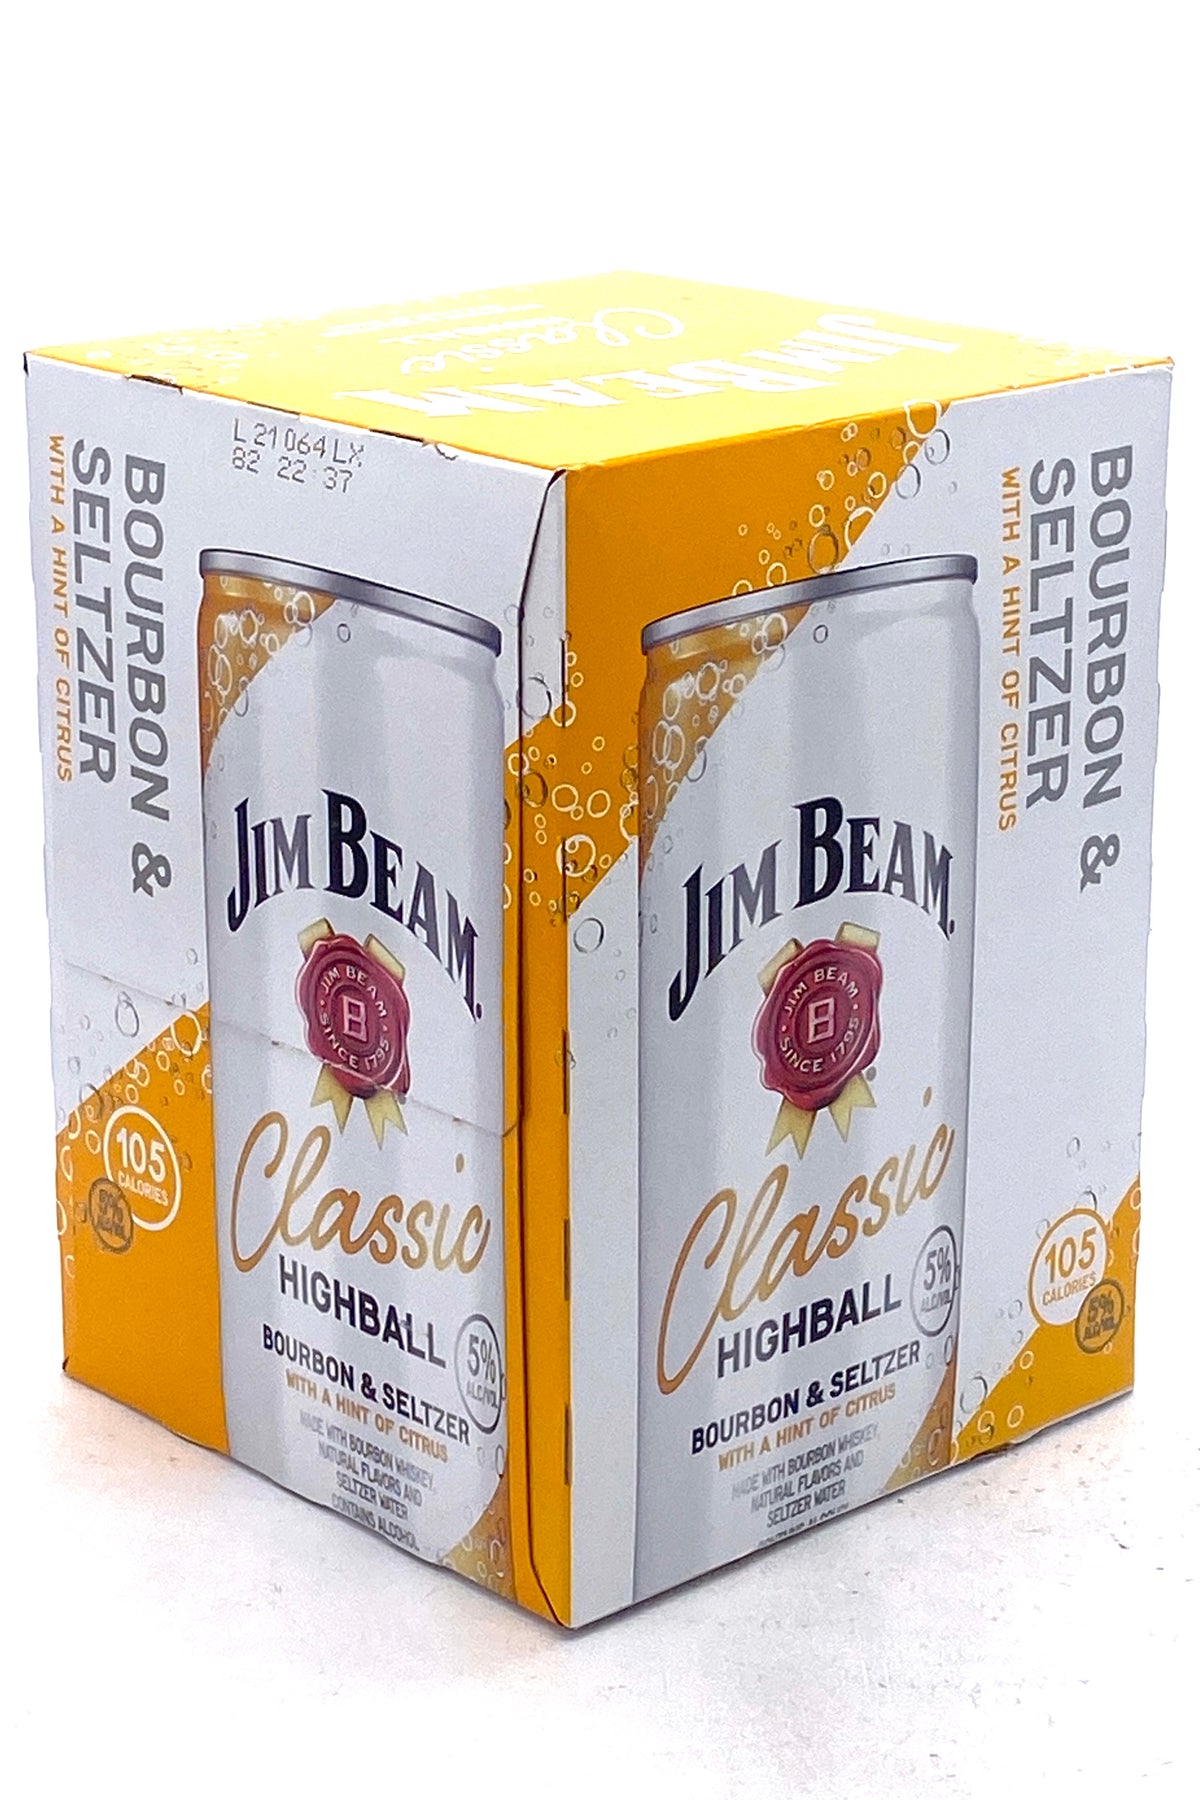 Jim Beam Classic High Ball Bourbon Seltzer RTD Cocktails 4 x 355ml Cans